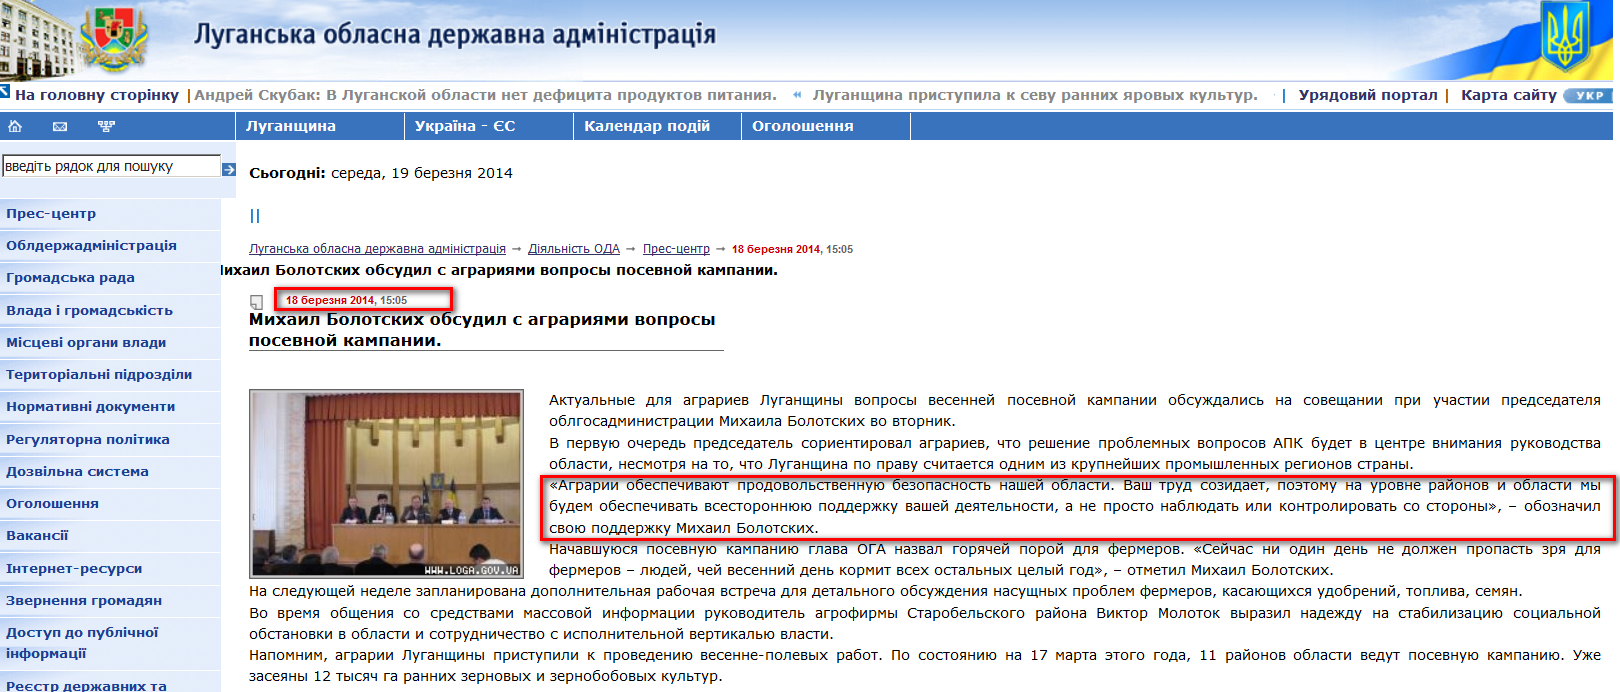 http://www.loga.gov.ua/oda/press/news/2014/03/18/news_66015.html